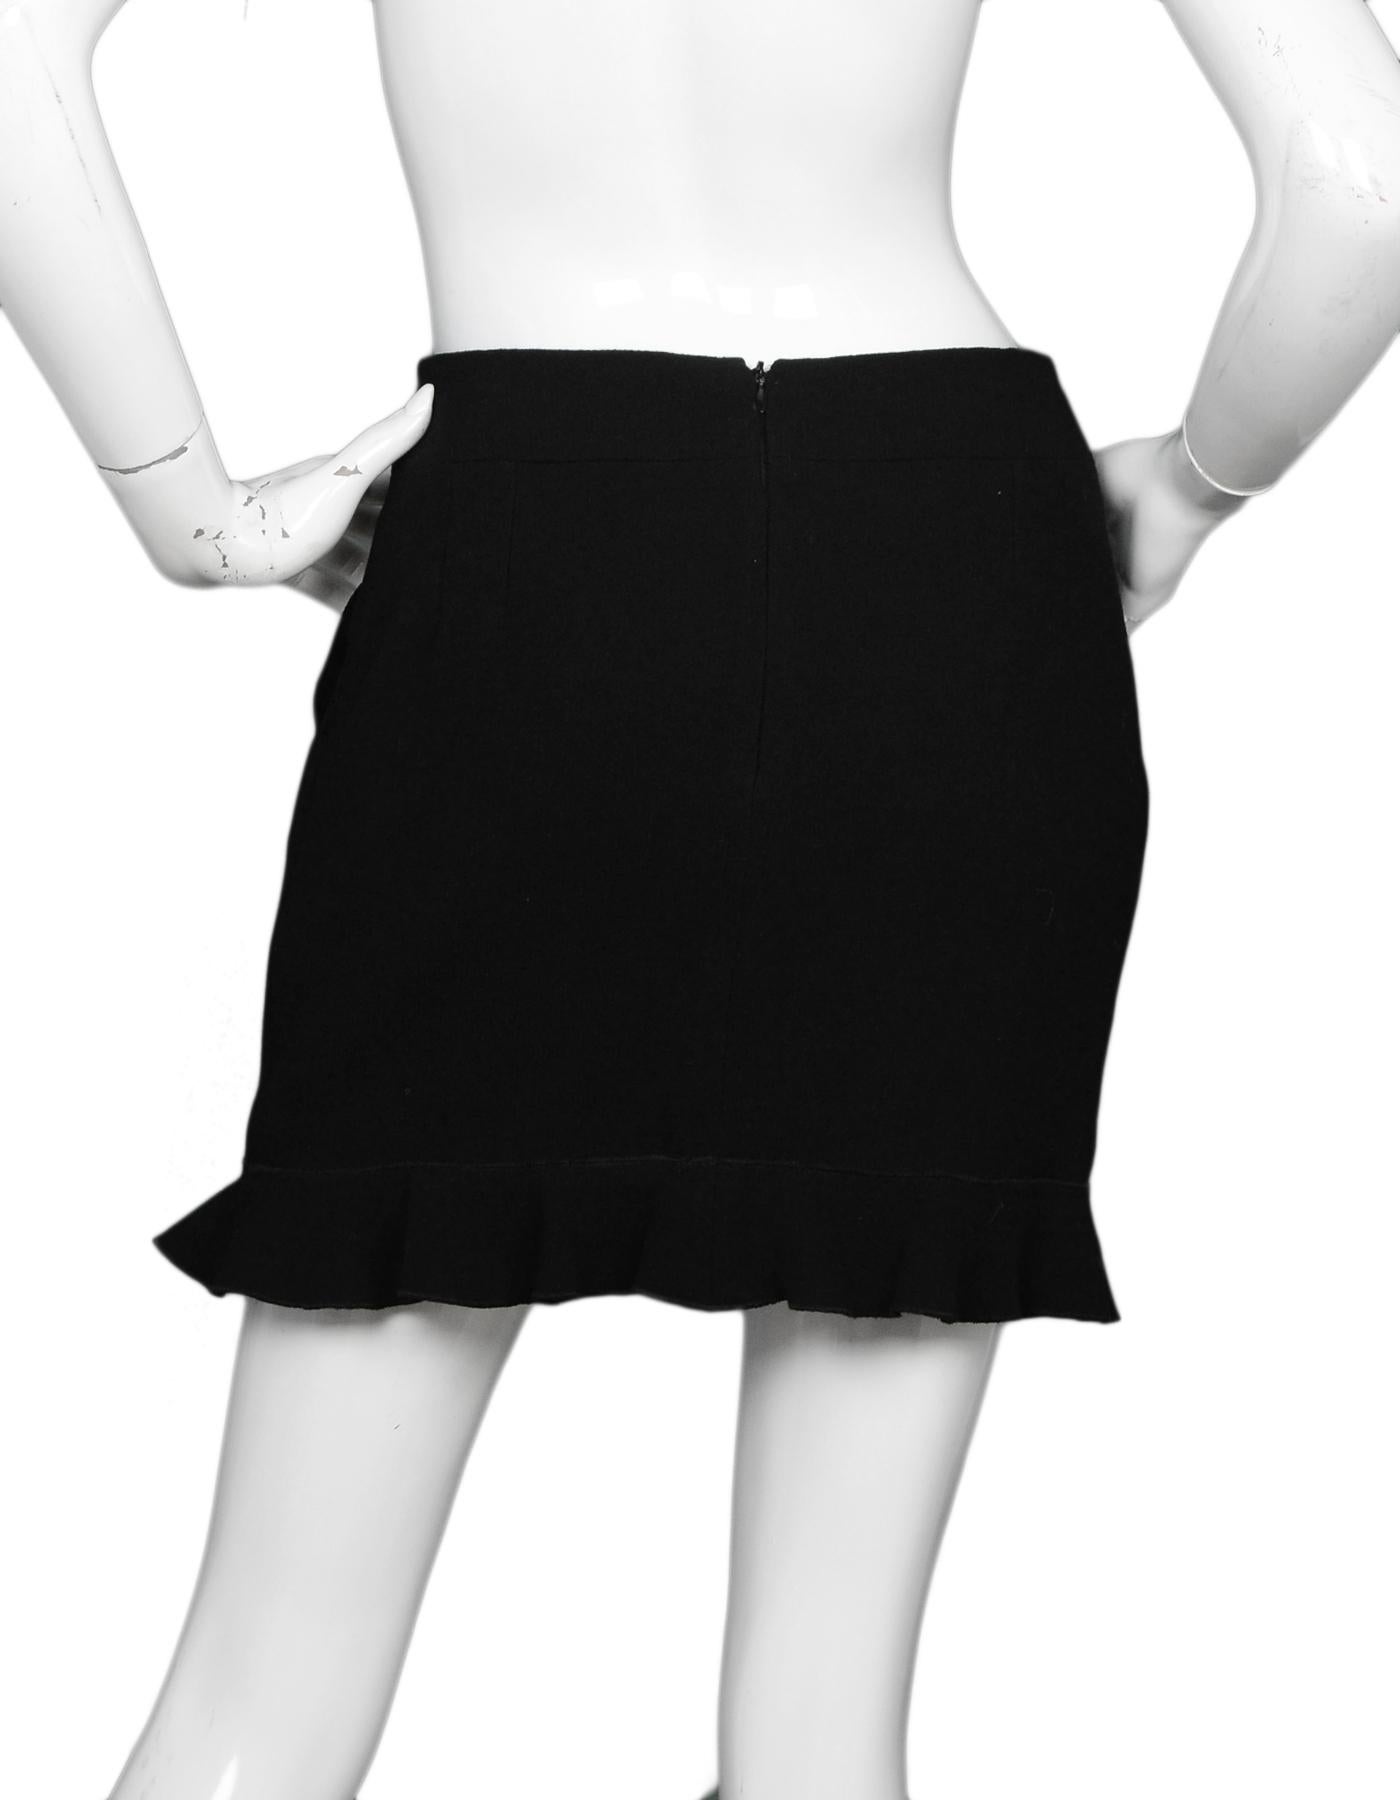 black skirt with ruffle bottom